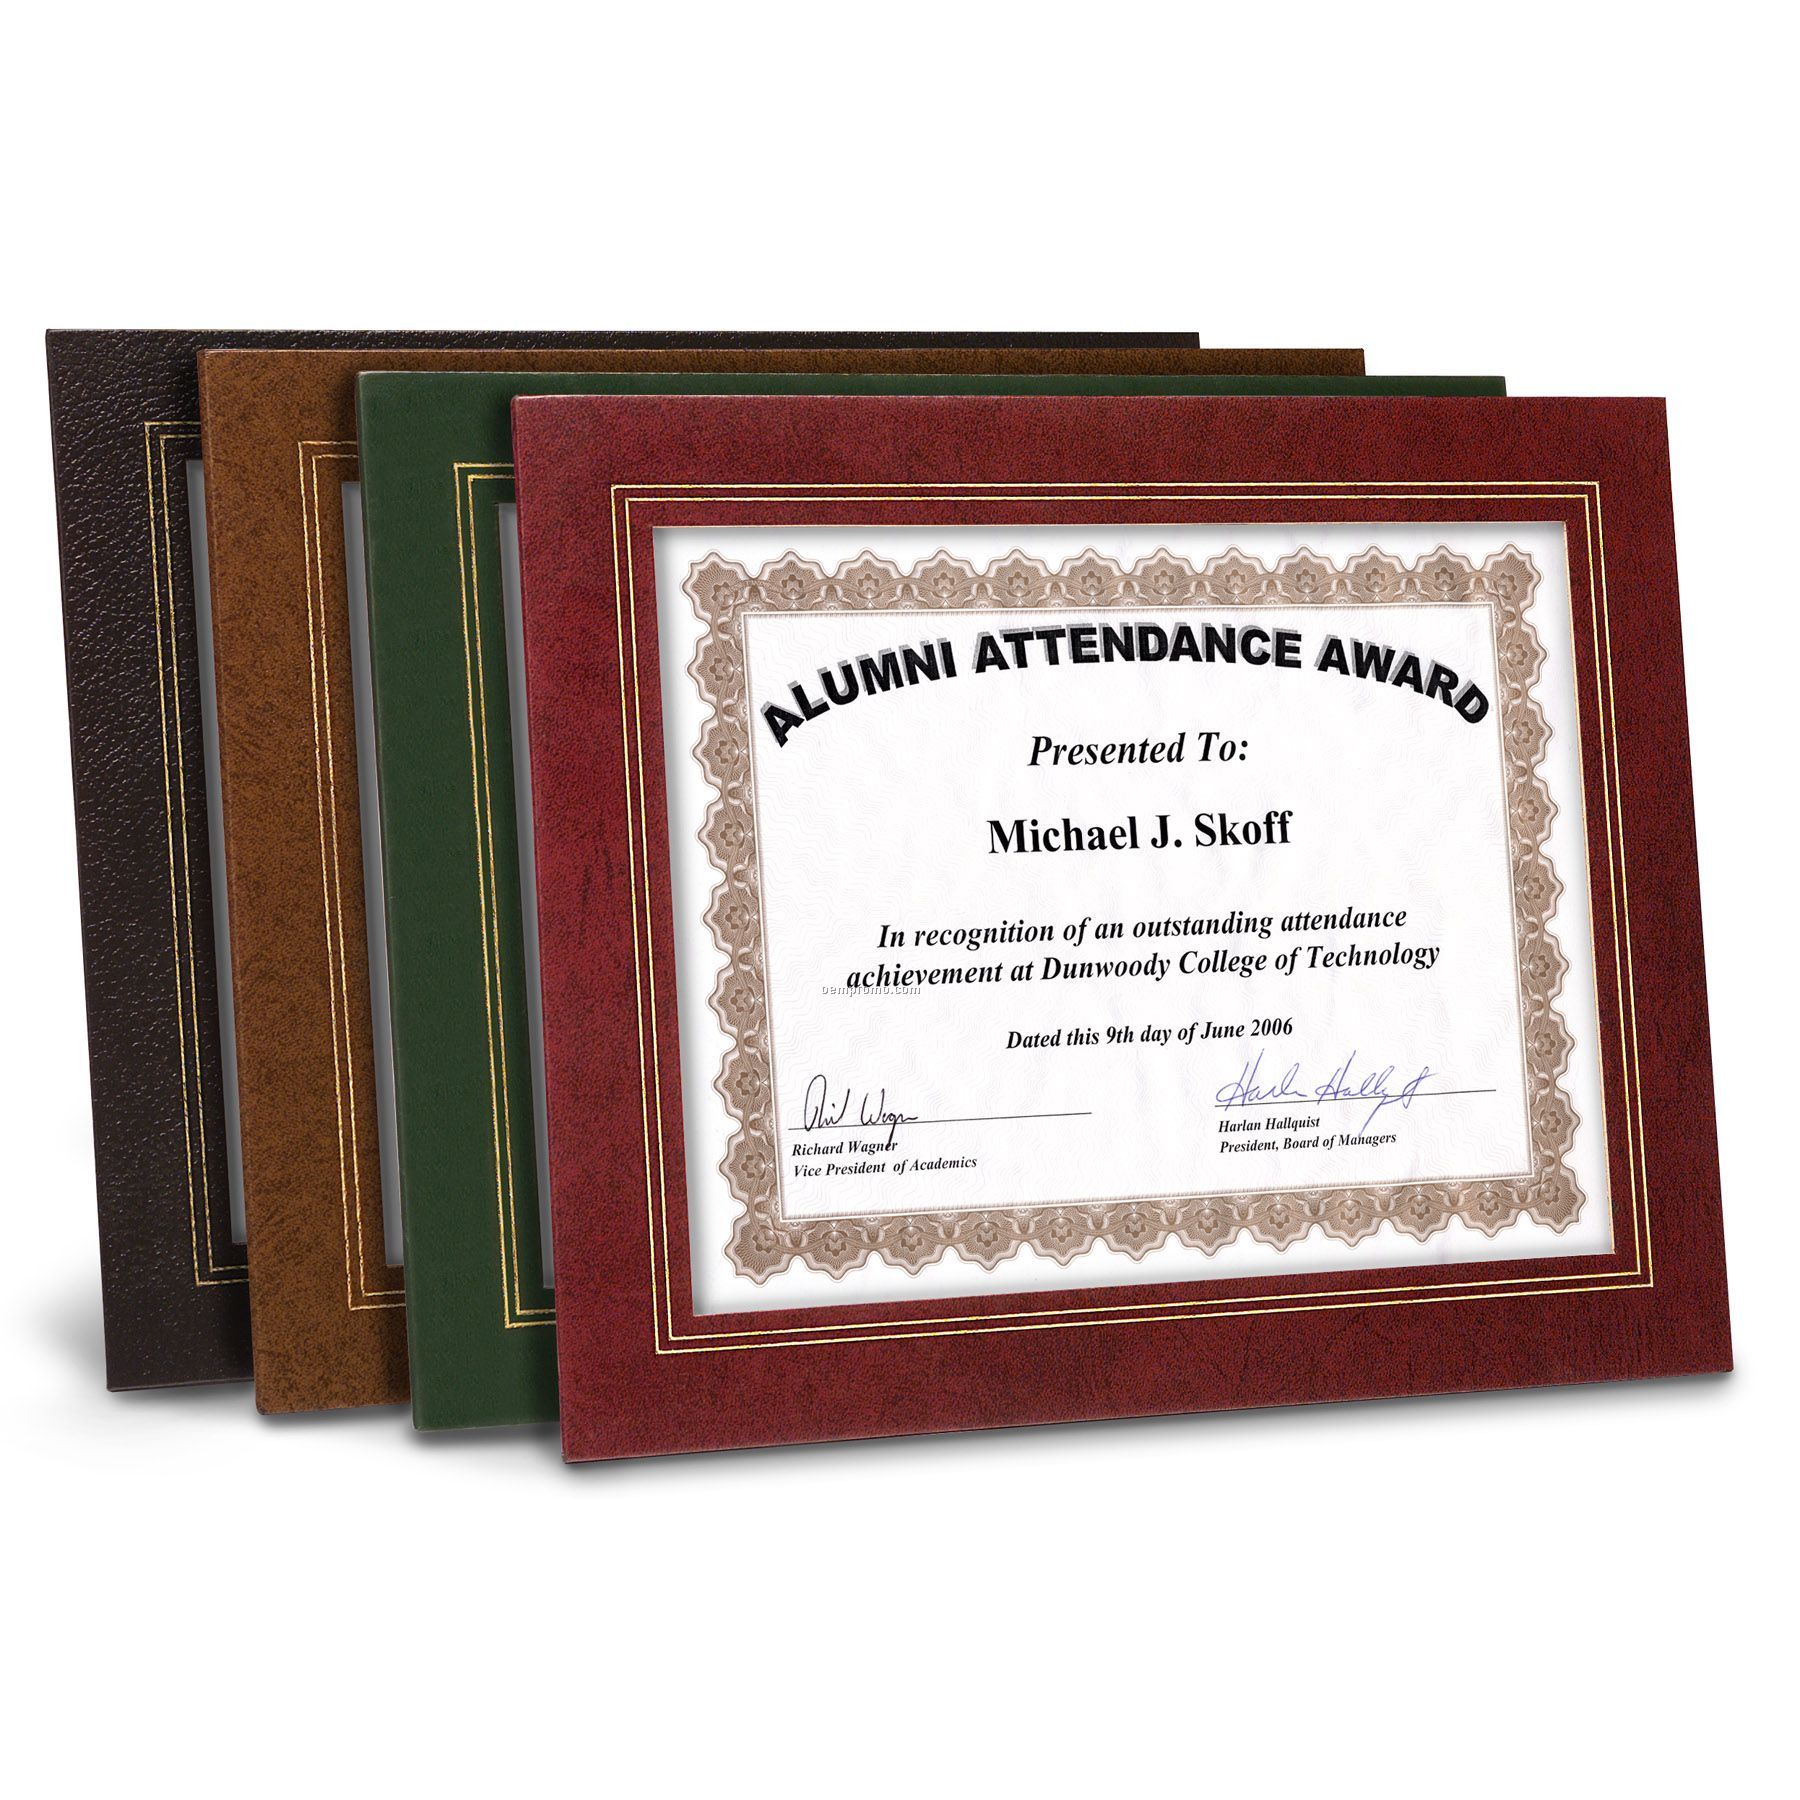 Certificate Holder - Leatherette Frame